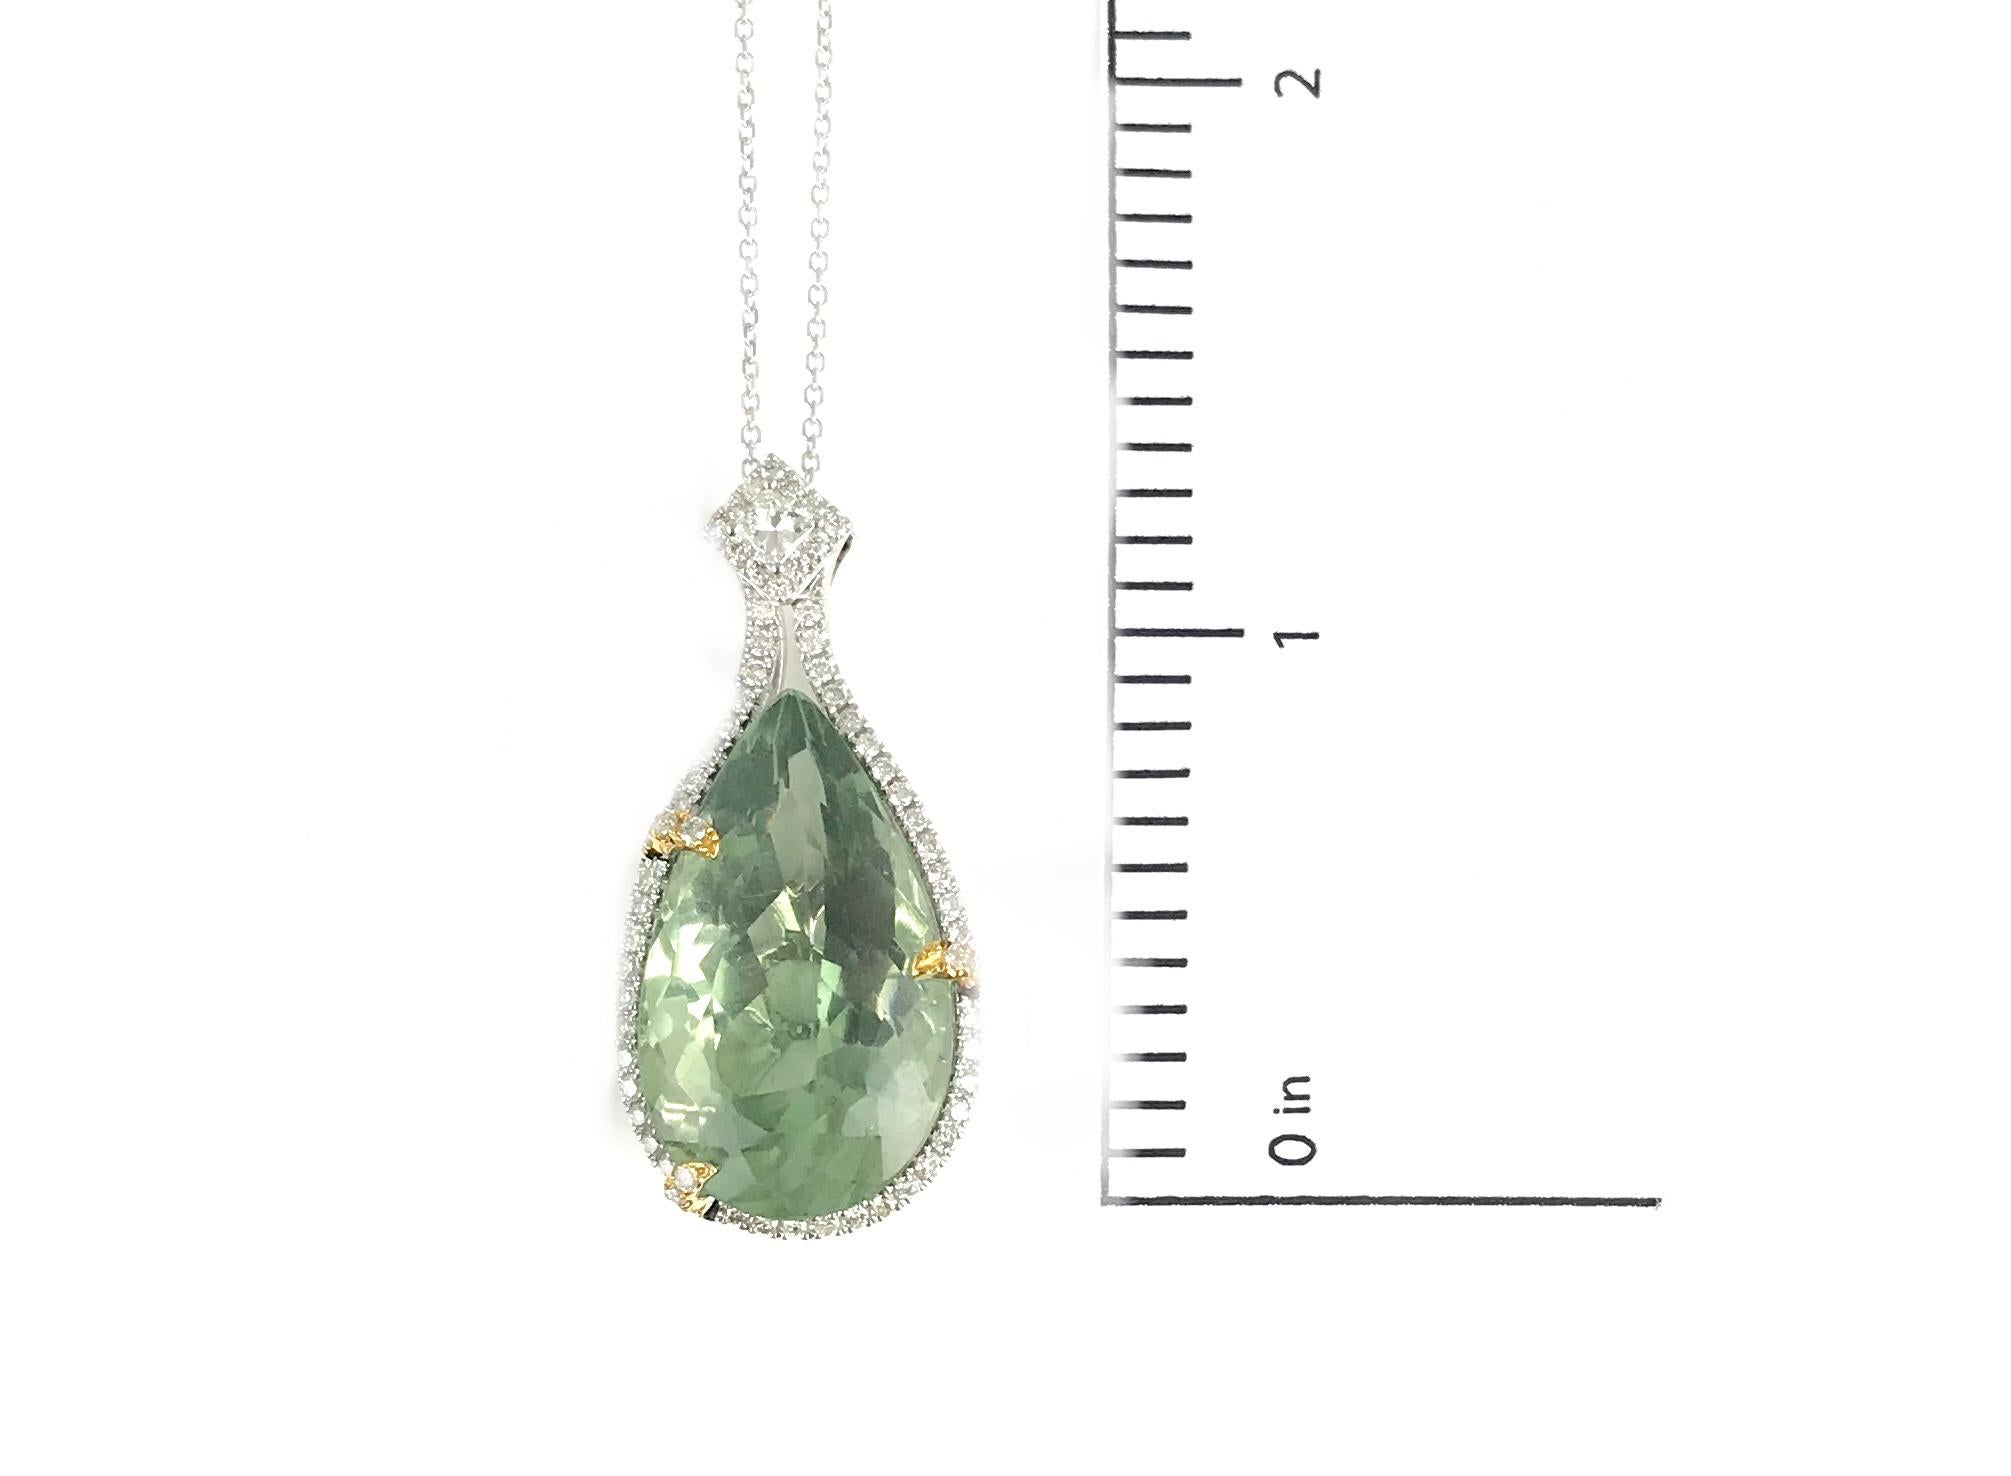 Contemporary DiamondTown 16.06 Carat Pear Shaped Exotic Kiwi Green Amethyst Pendant